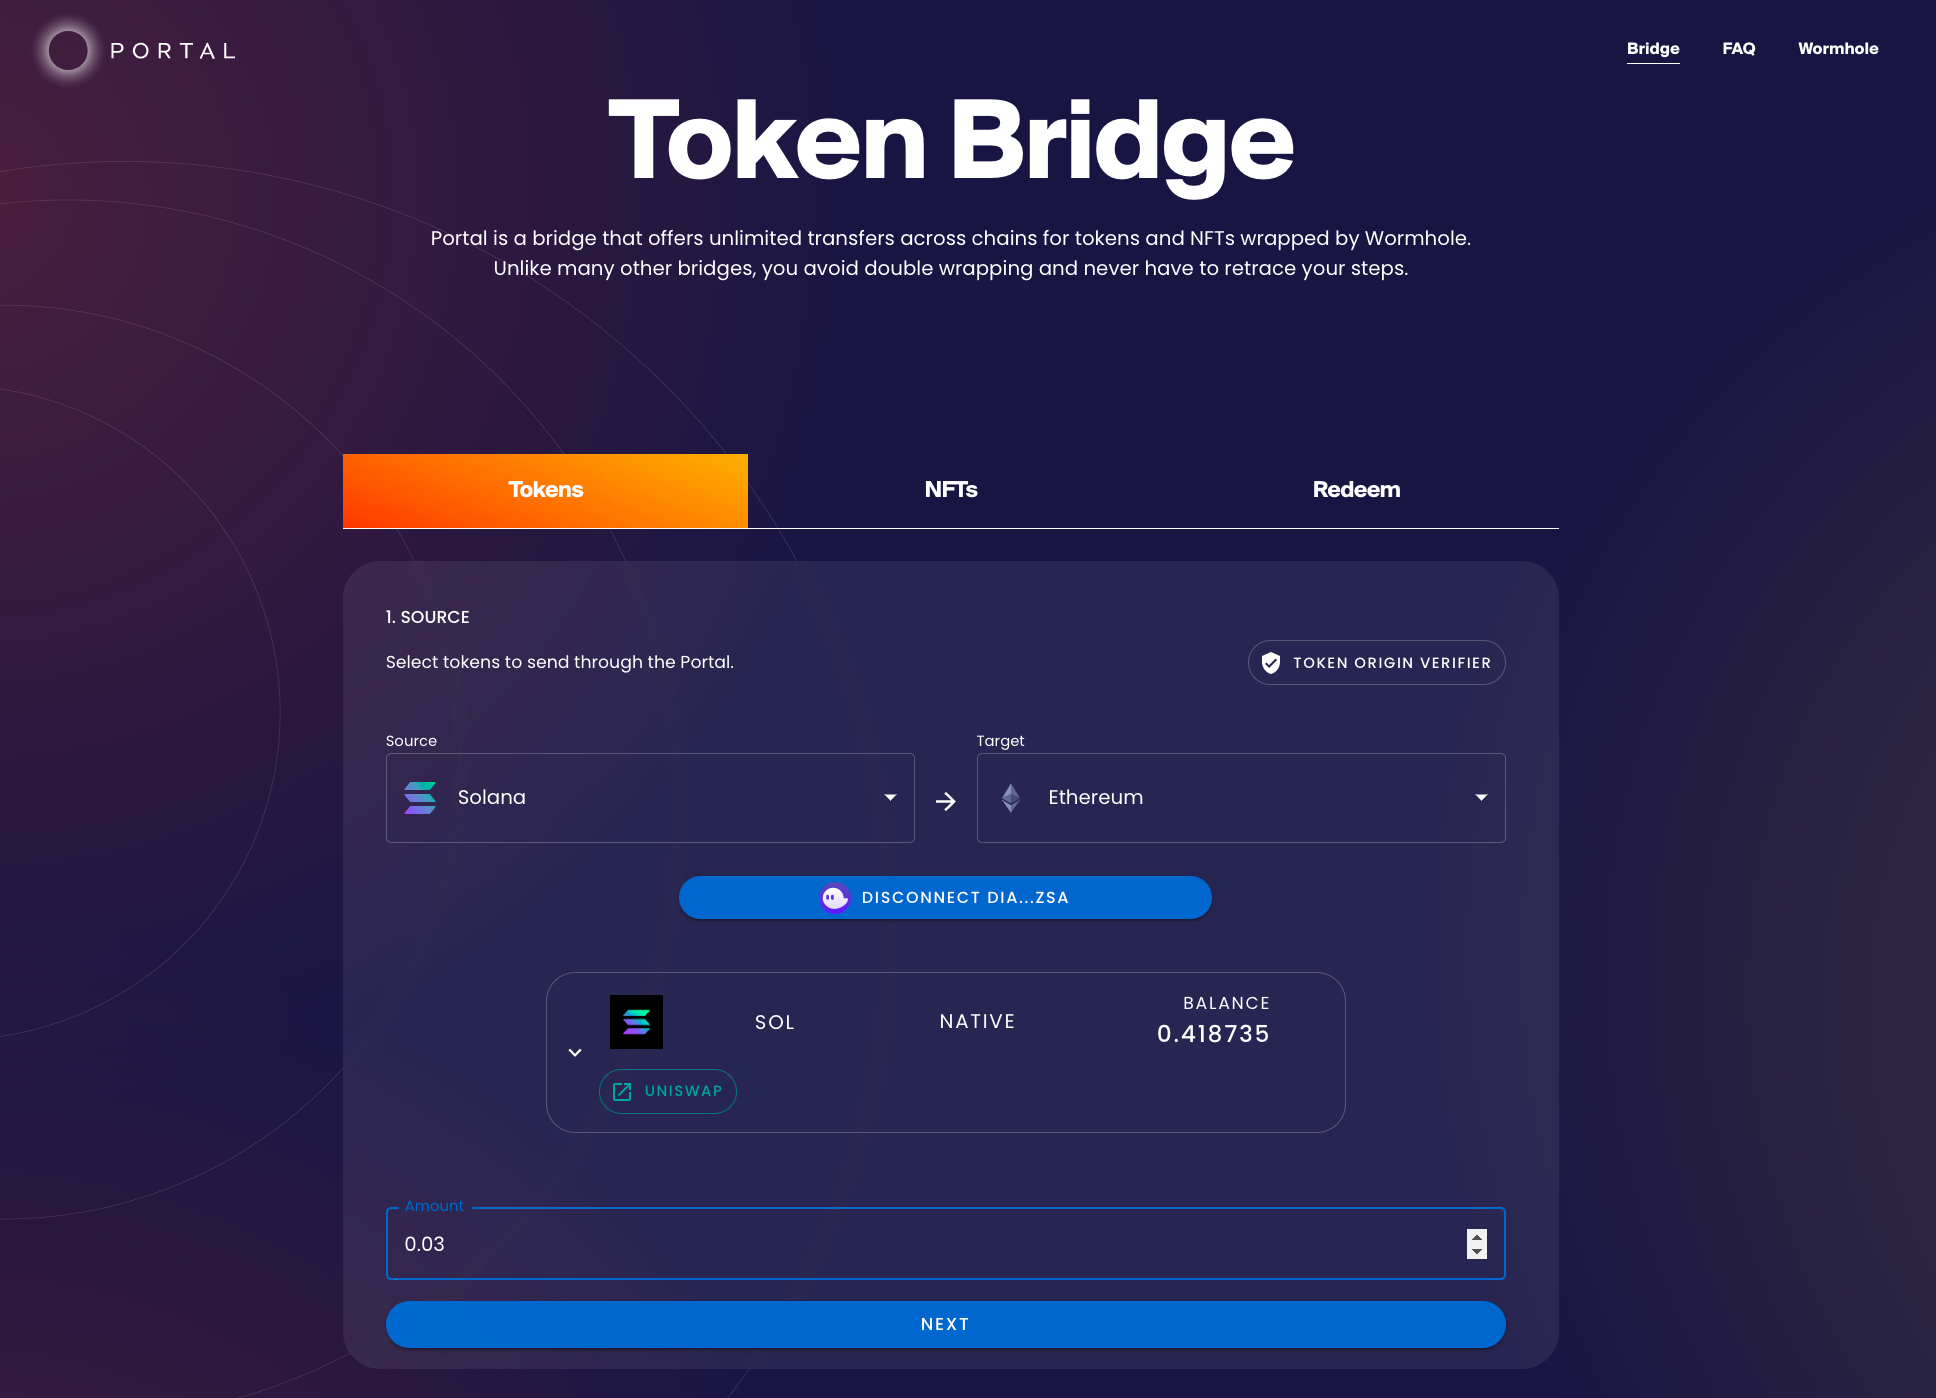 enter amount you want to transfer via Portal token bridge